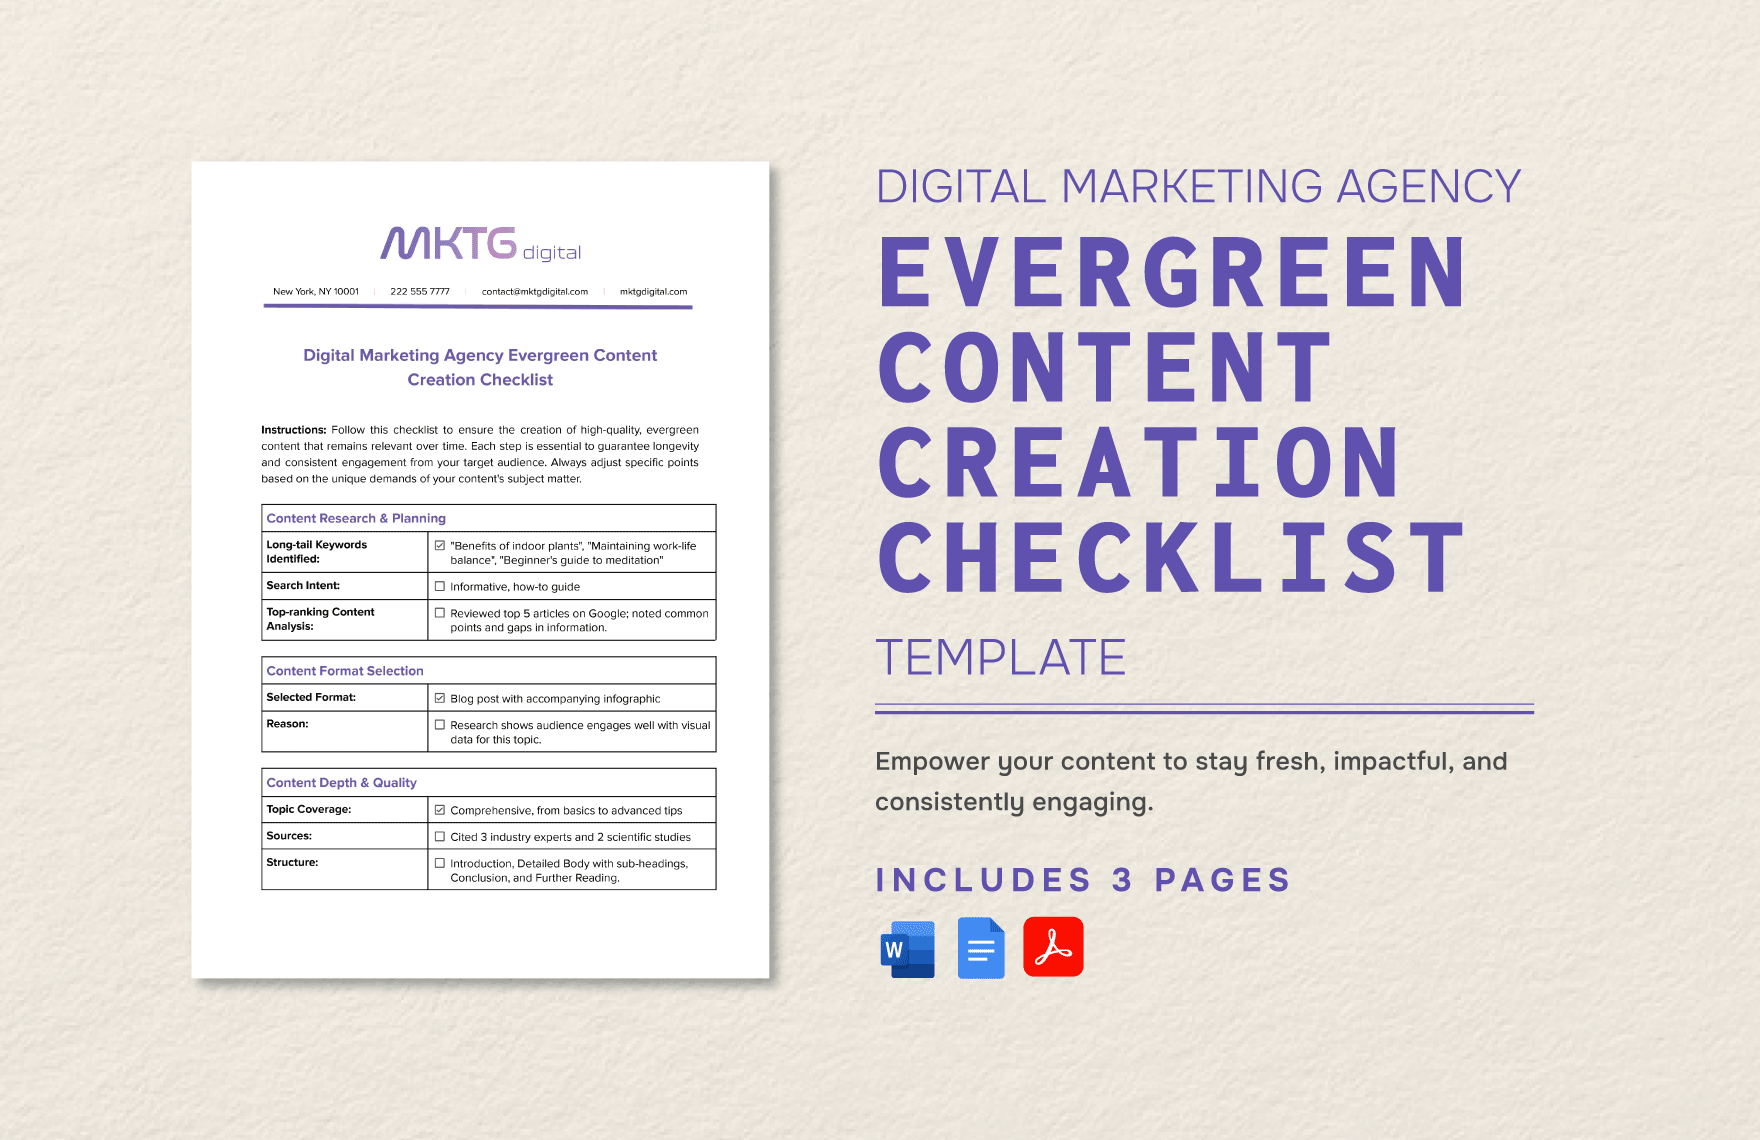 Digital Marketing Agency Evergreen Content Creation Checklist Template in Word, Google Docs, PDF